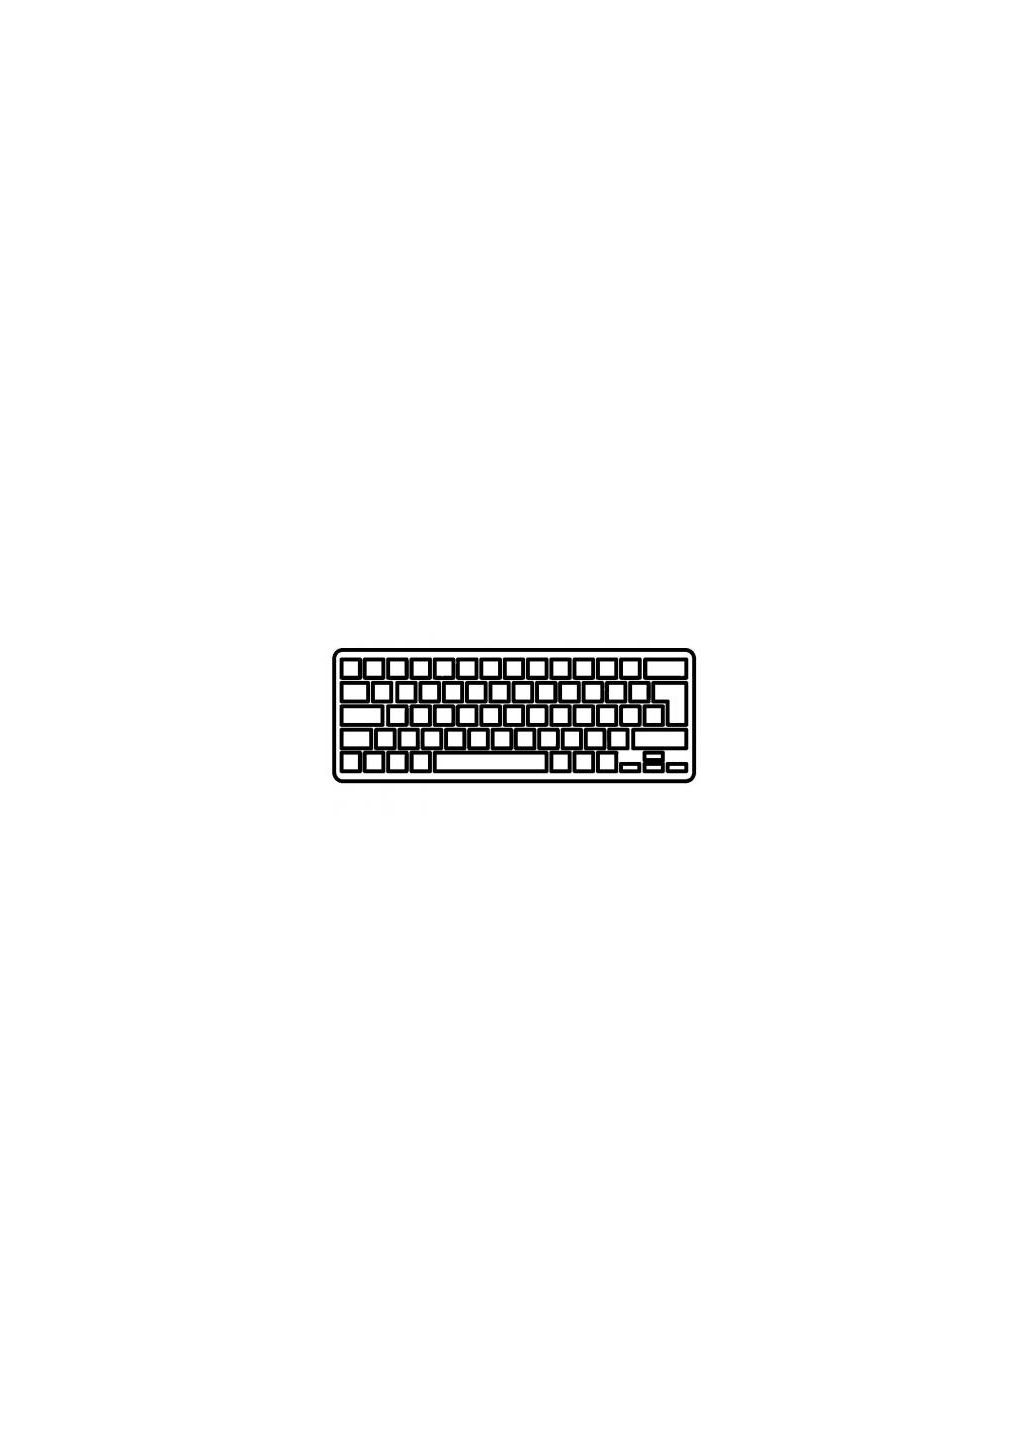 Клавиатура ноутбука SVF15N (Fit 15N Series) черная с рамкой подсветкой UA (A43829) Sony svf15n (fit 15n series) черная с черной рамкой под (276707411)